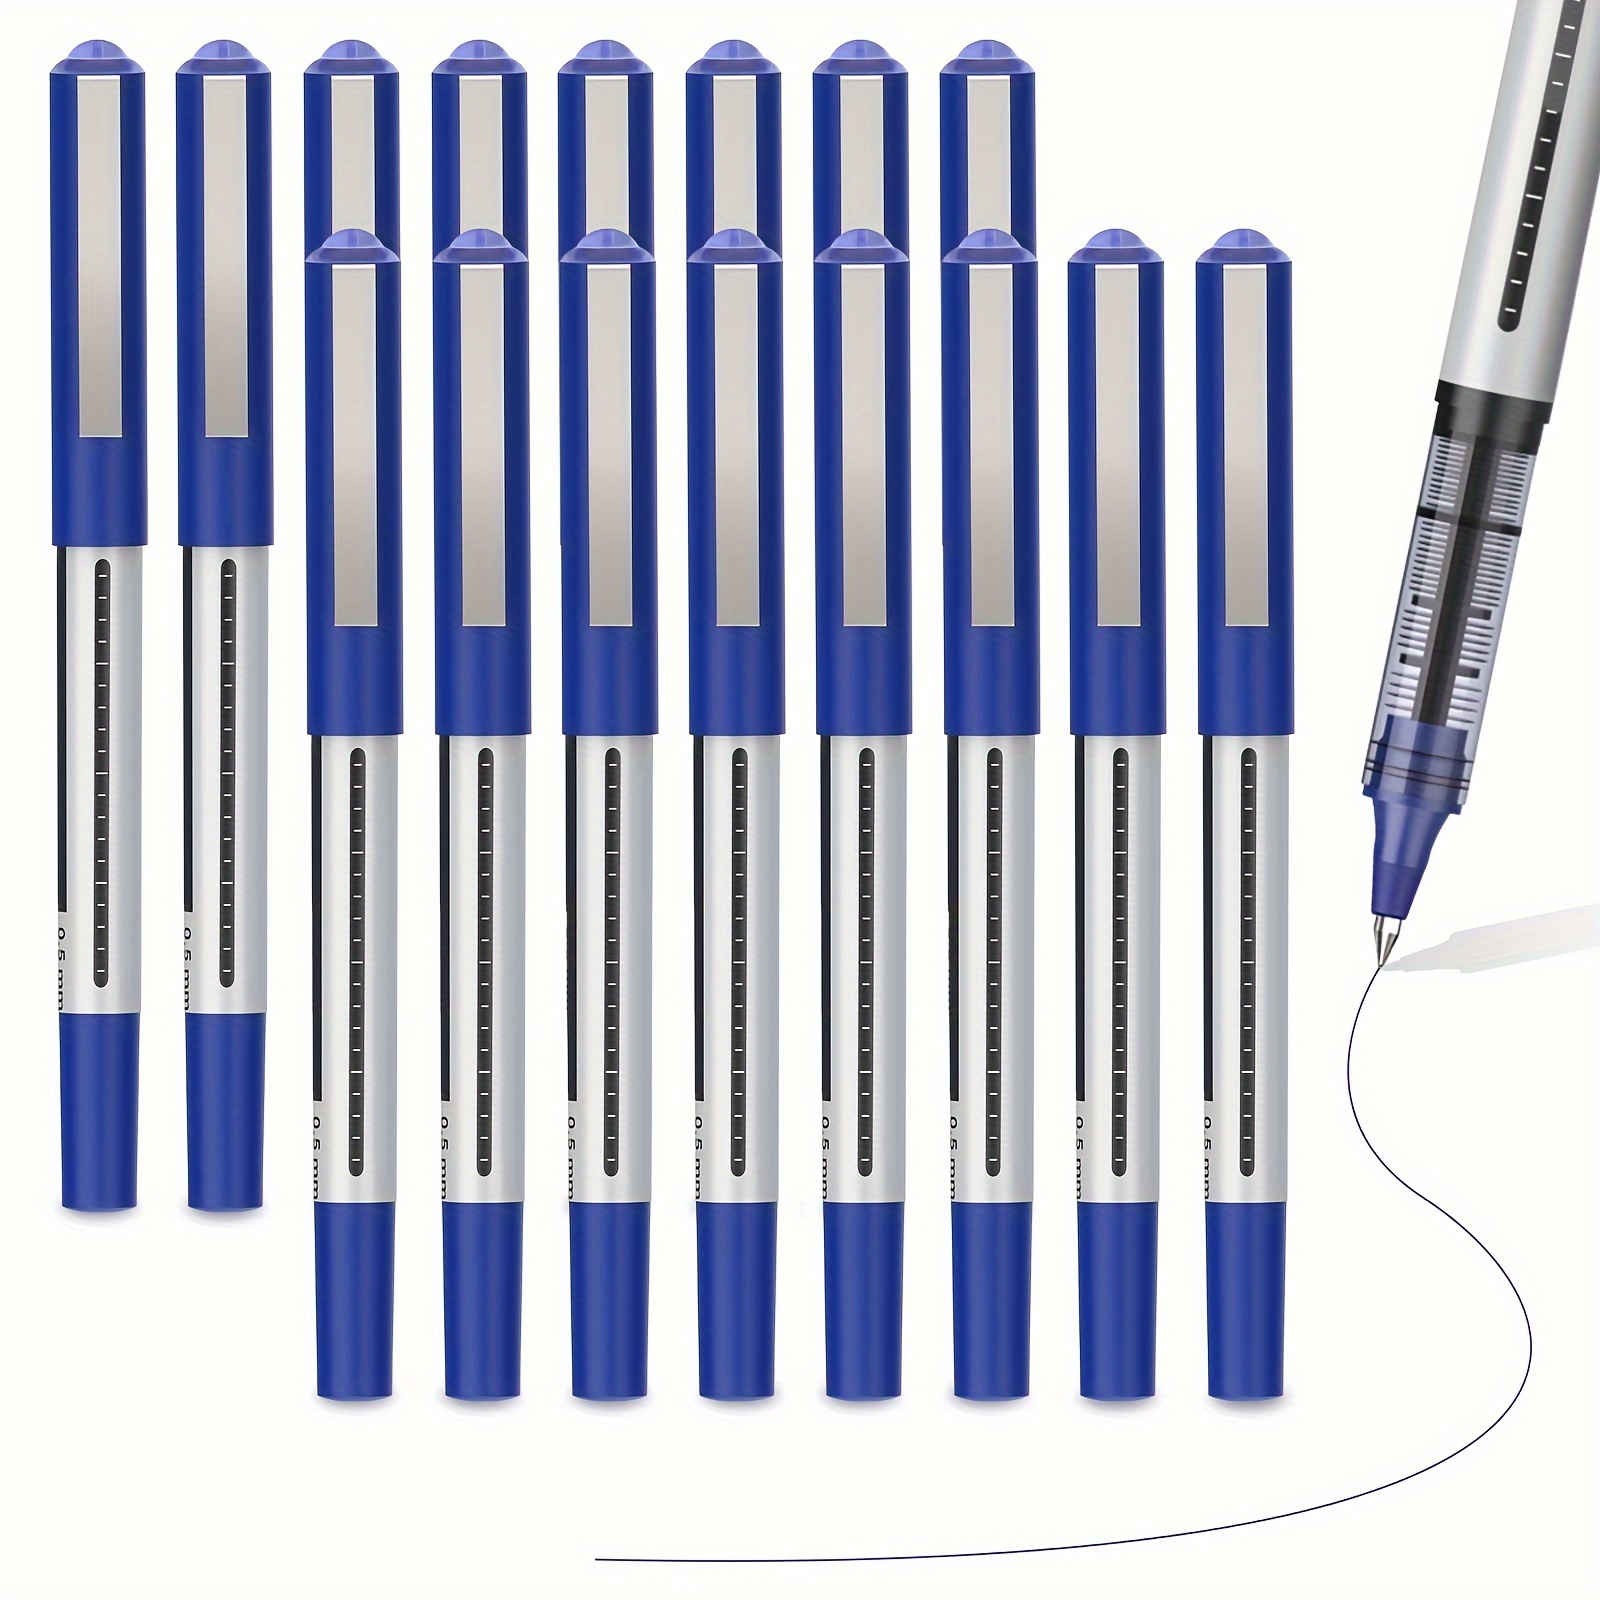 Set of 12 Pens. 0.5mm Roller Pens| Writing Supplies & Correction Supplies |Pilot Pens. 0.5mm Blue Pens Fine Point Pen| Japanese Pens (Blue)